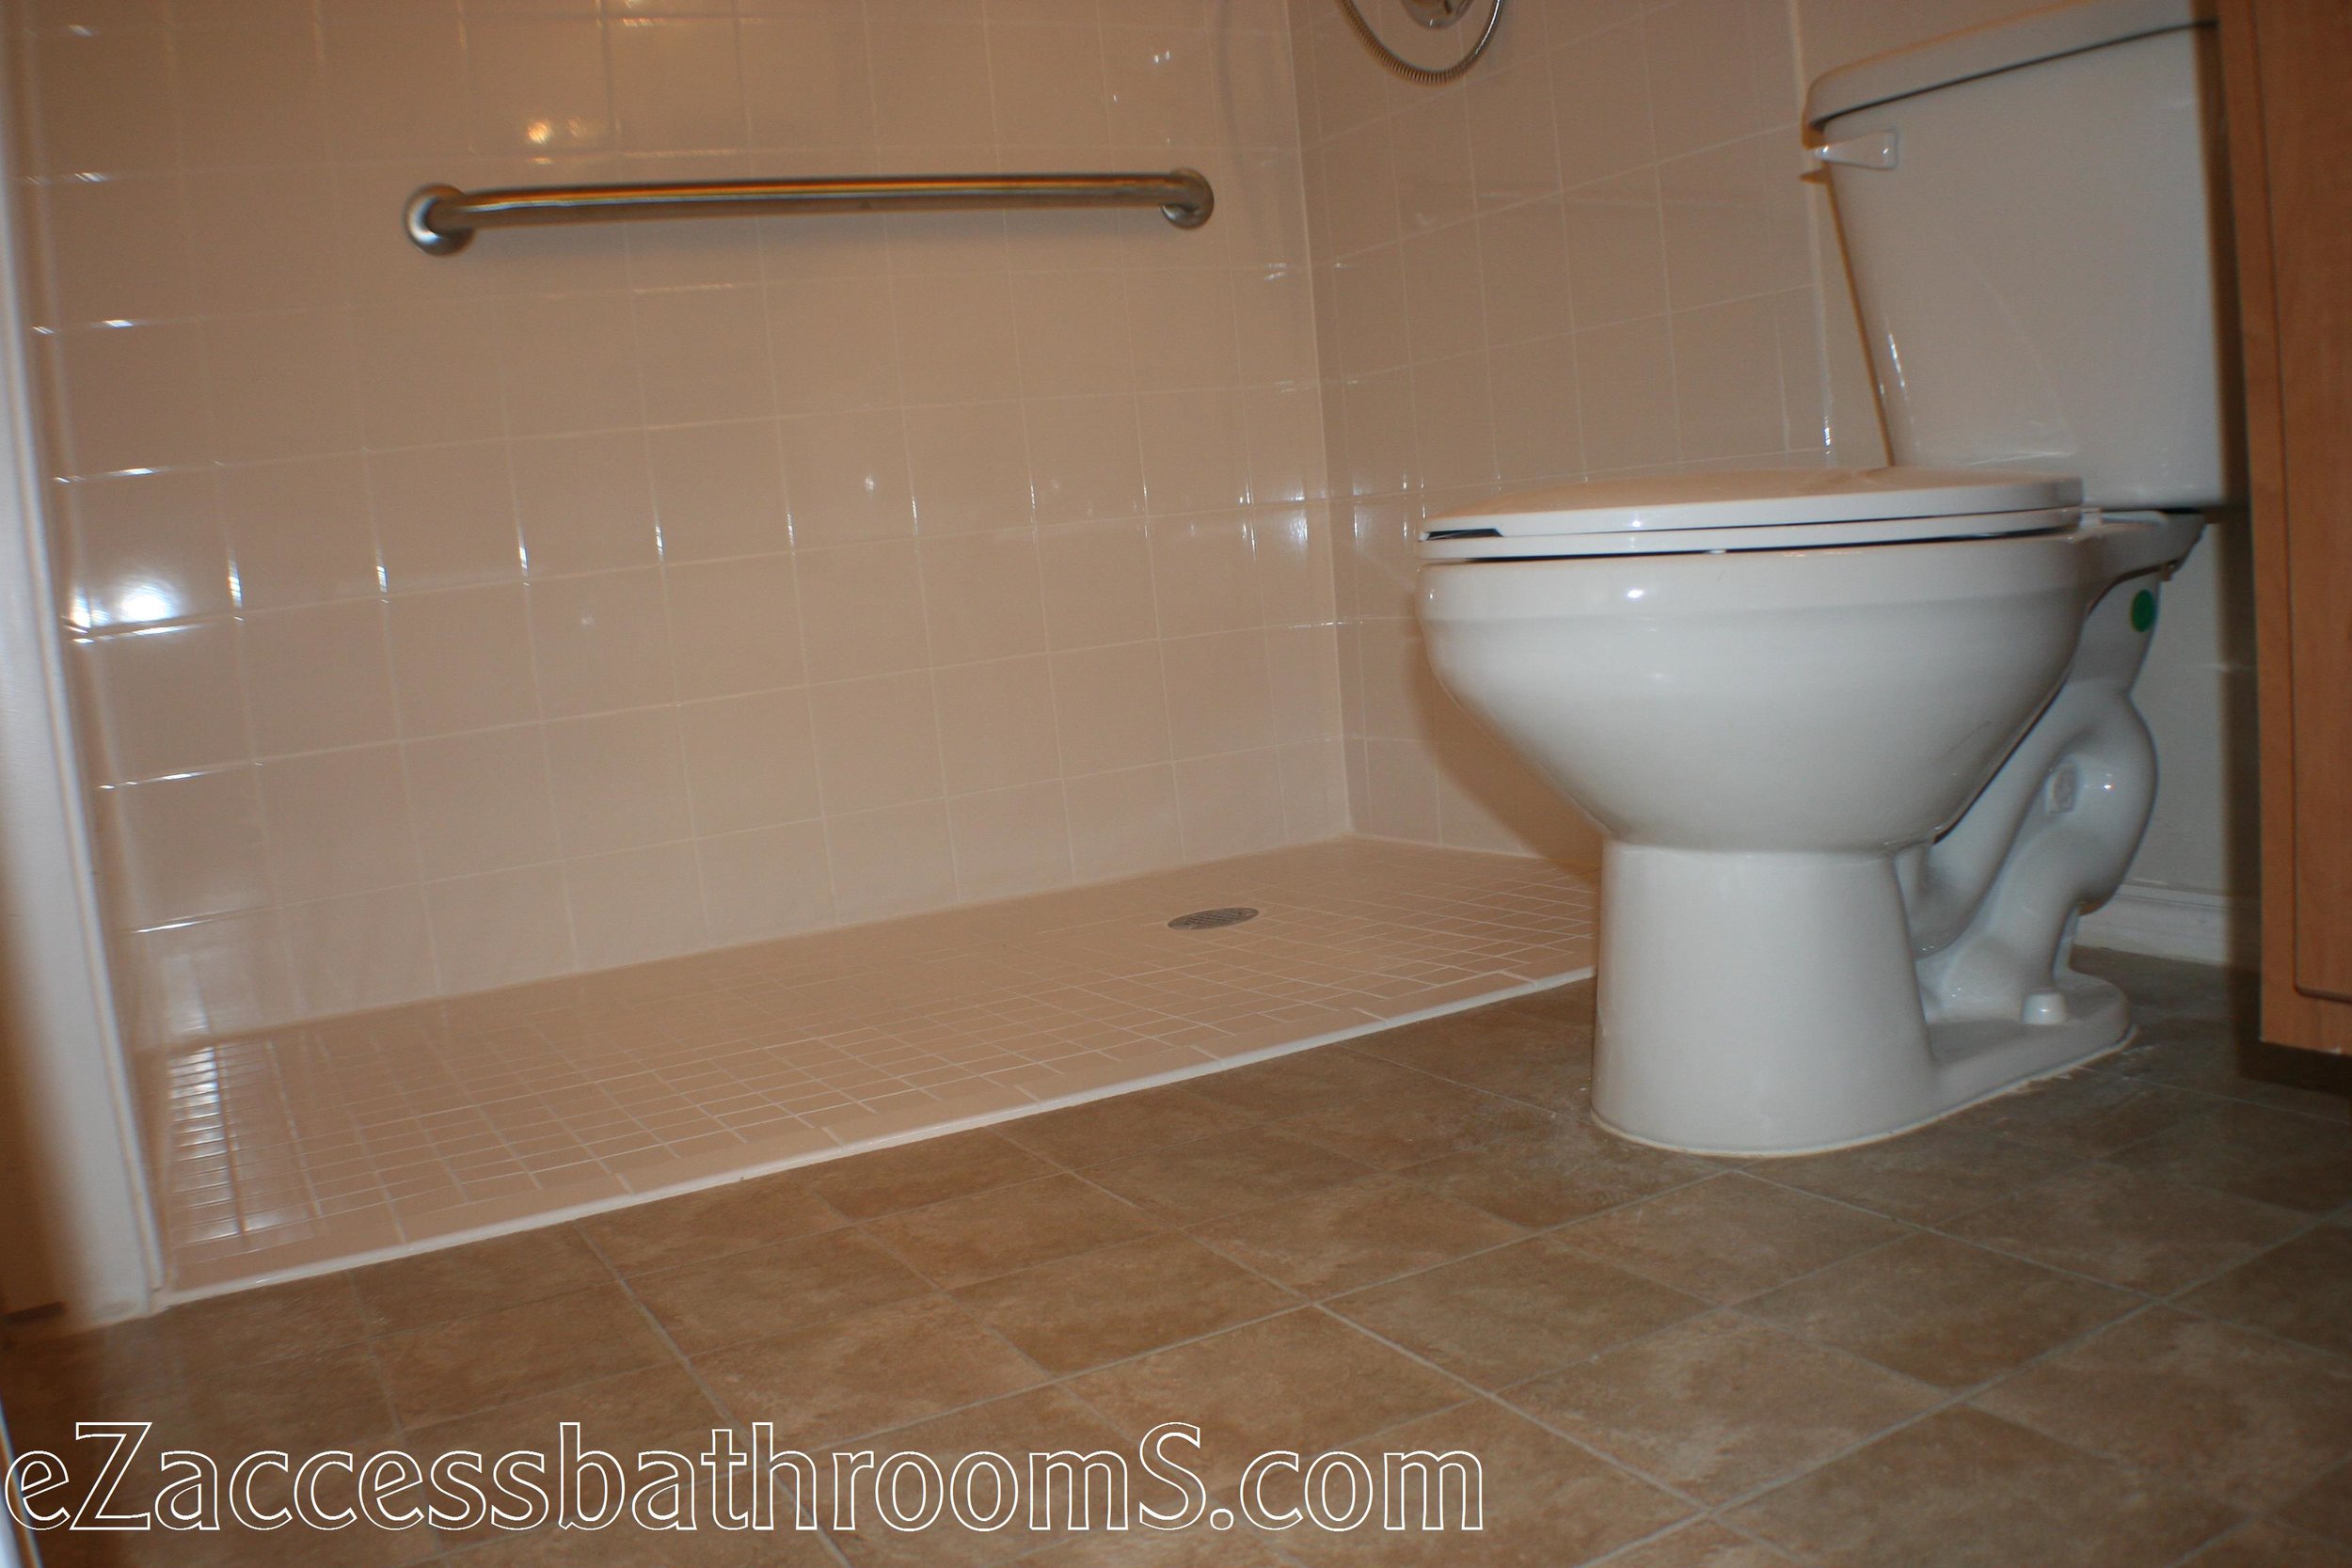 cheap tub to shower conversion ezaccessbathrooms.com 025.JPG